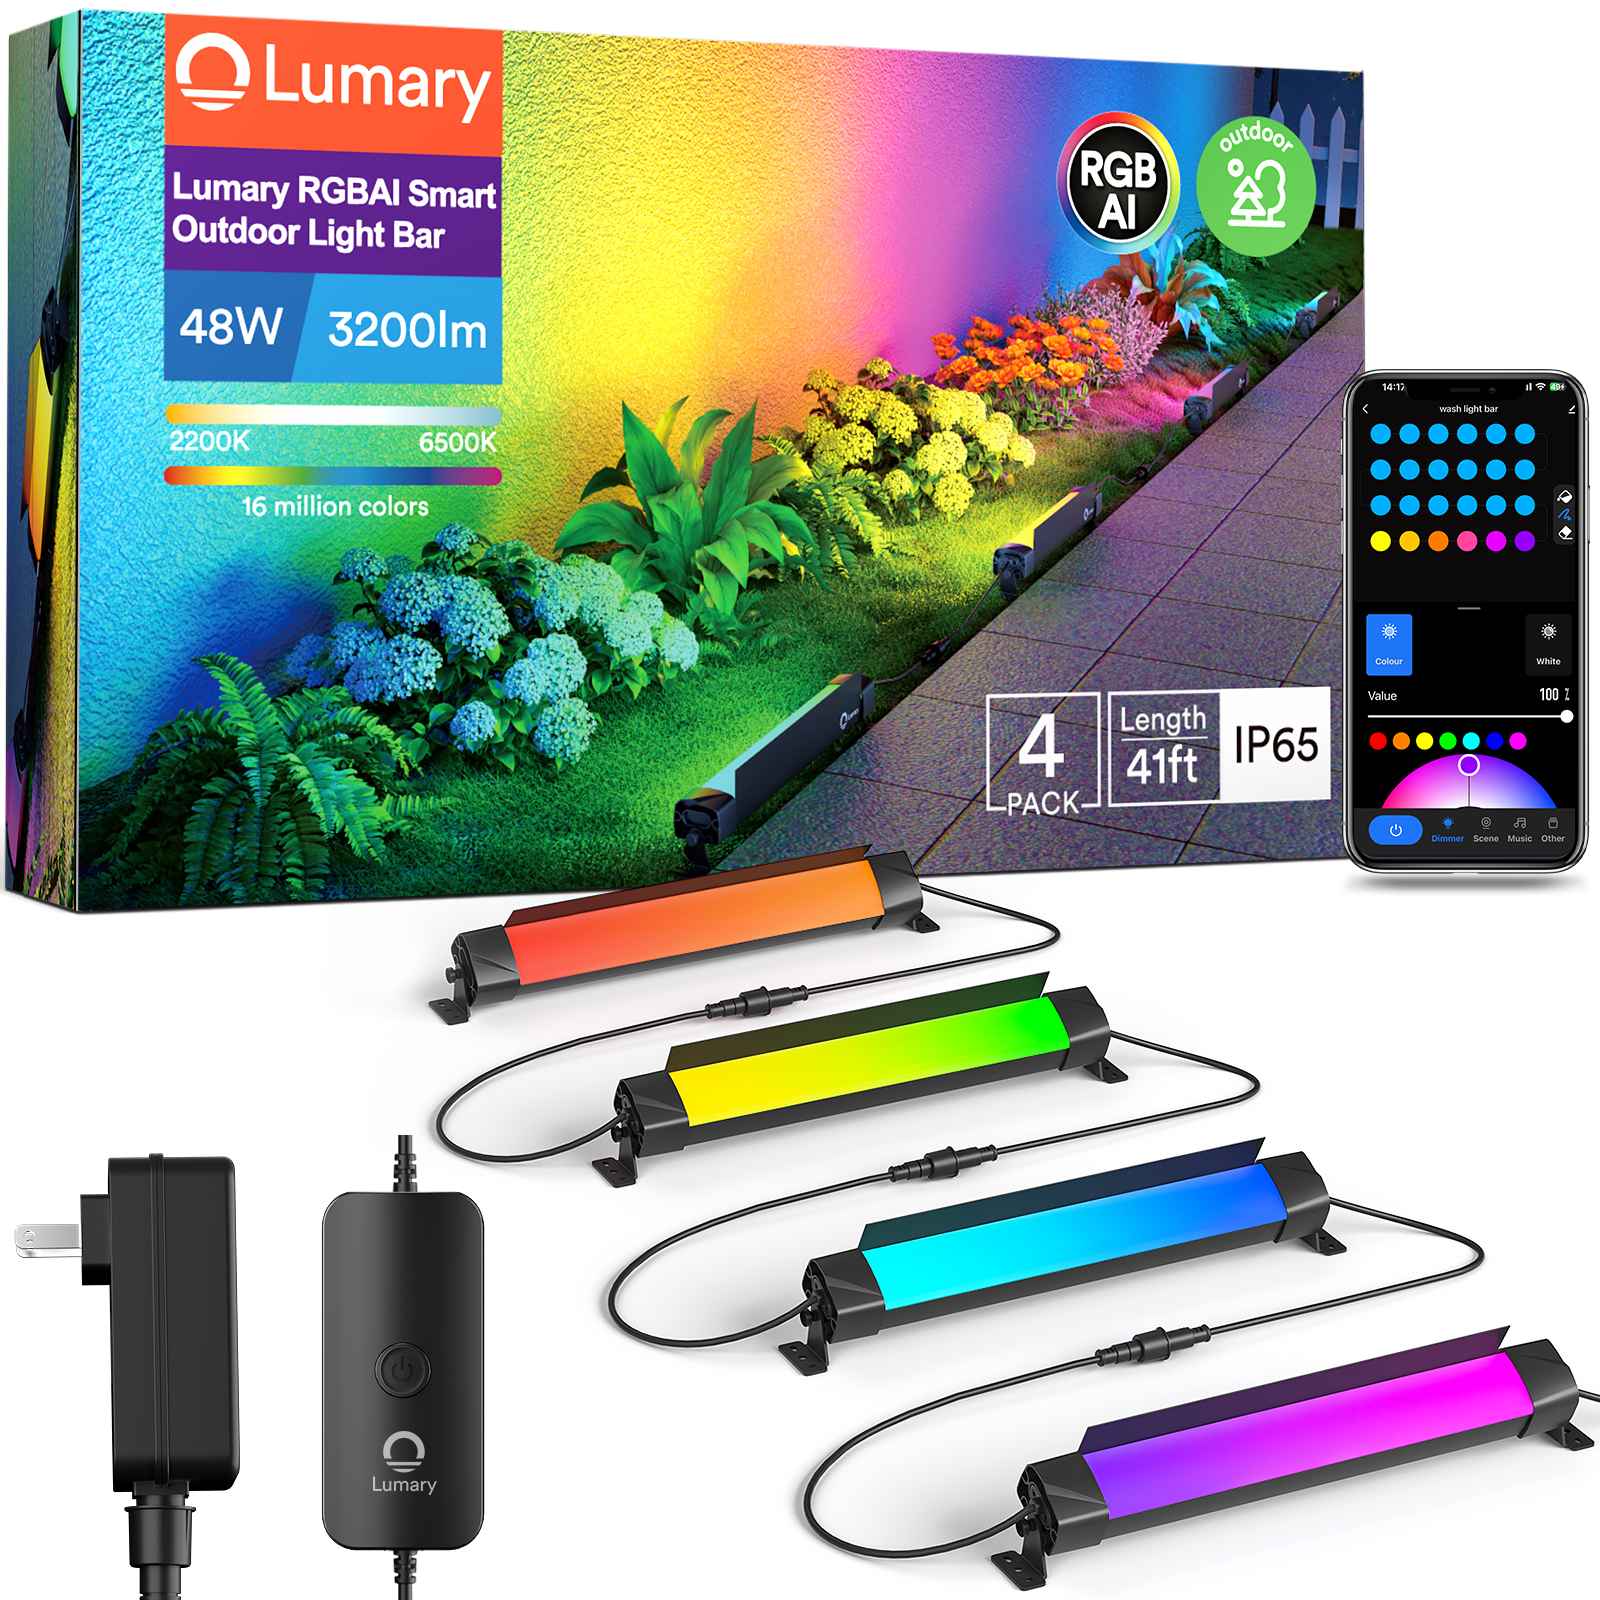 Lumary RGBAI Smart Outdoor Lights Bar 4 PACK